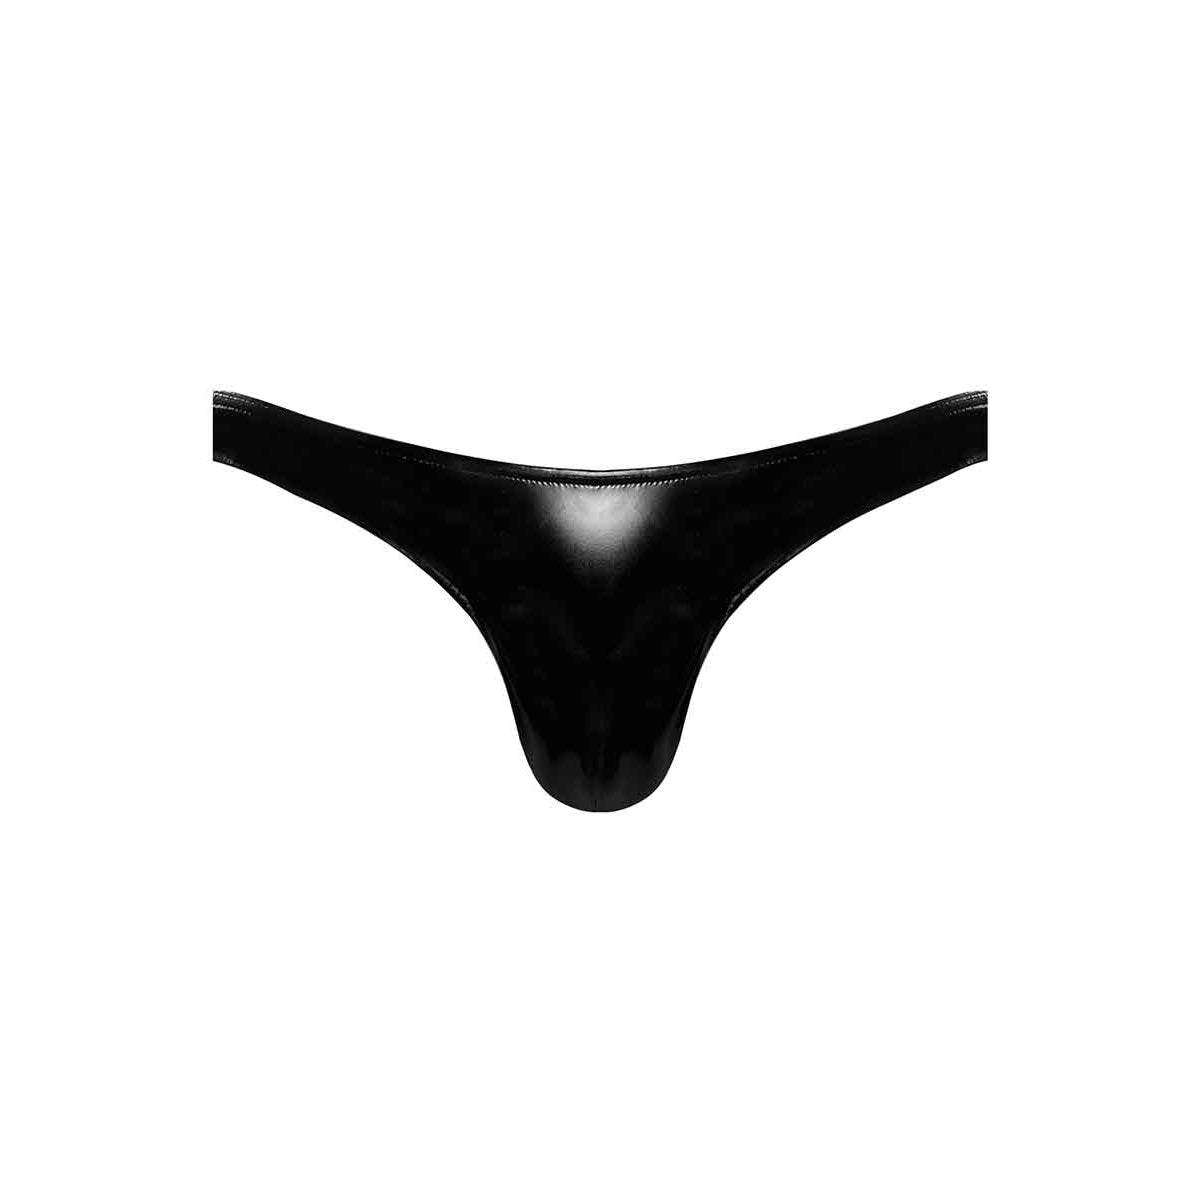 Male Power Liquid Onyx Moonshine Underwear